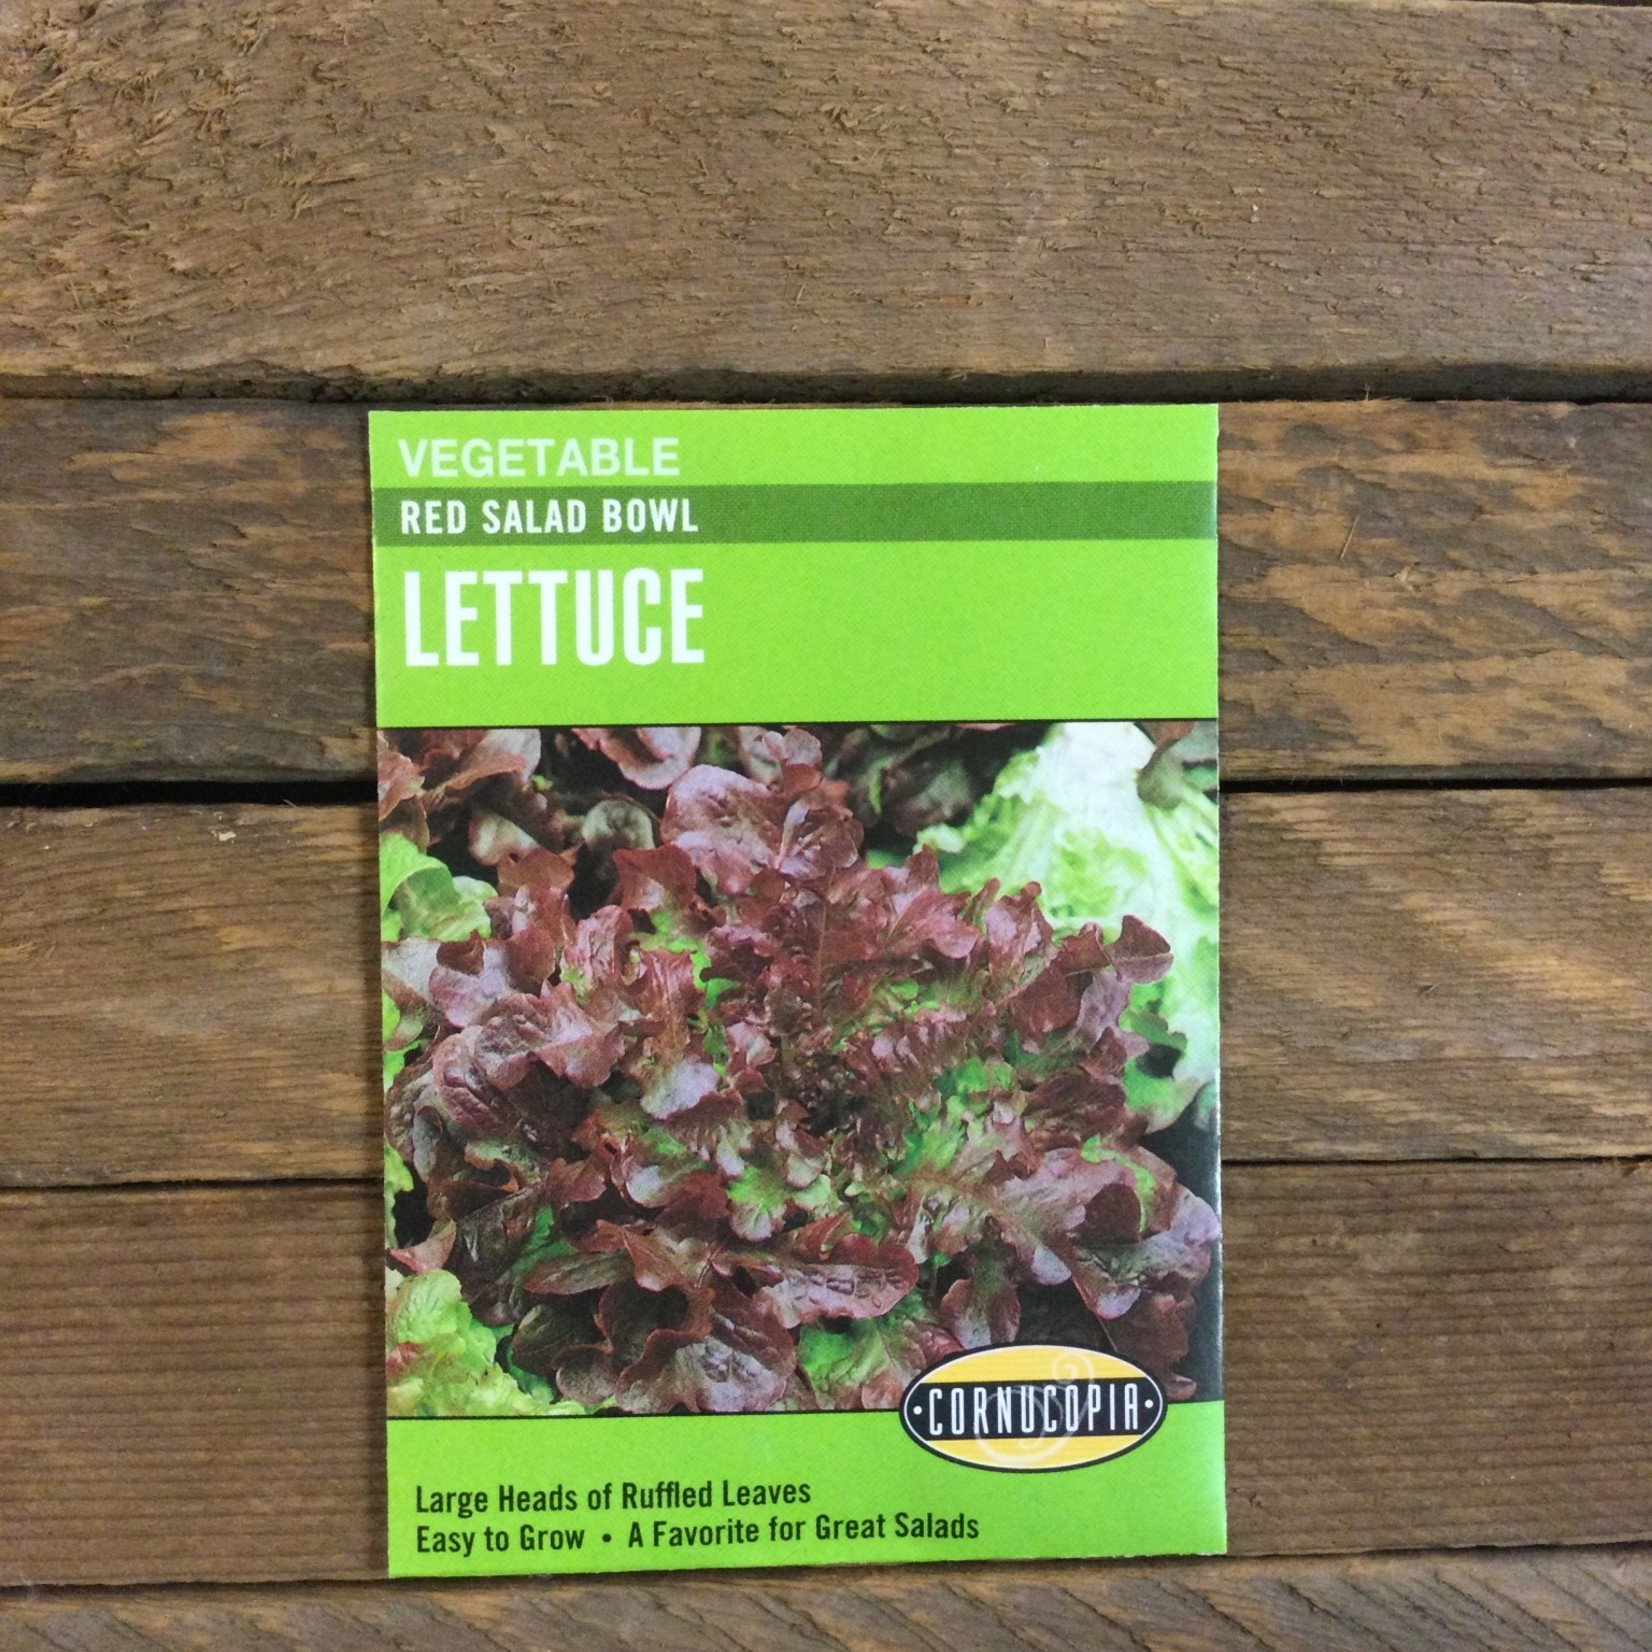 Cornucopia Lettuce - Lettuce Red Salad Bowl